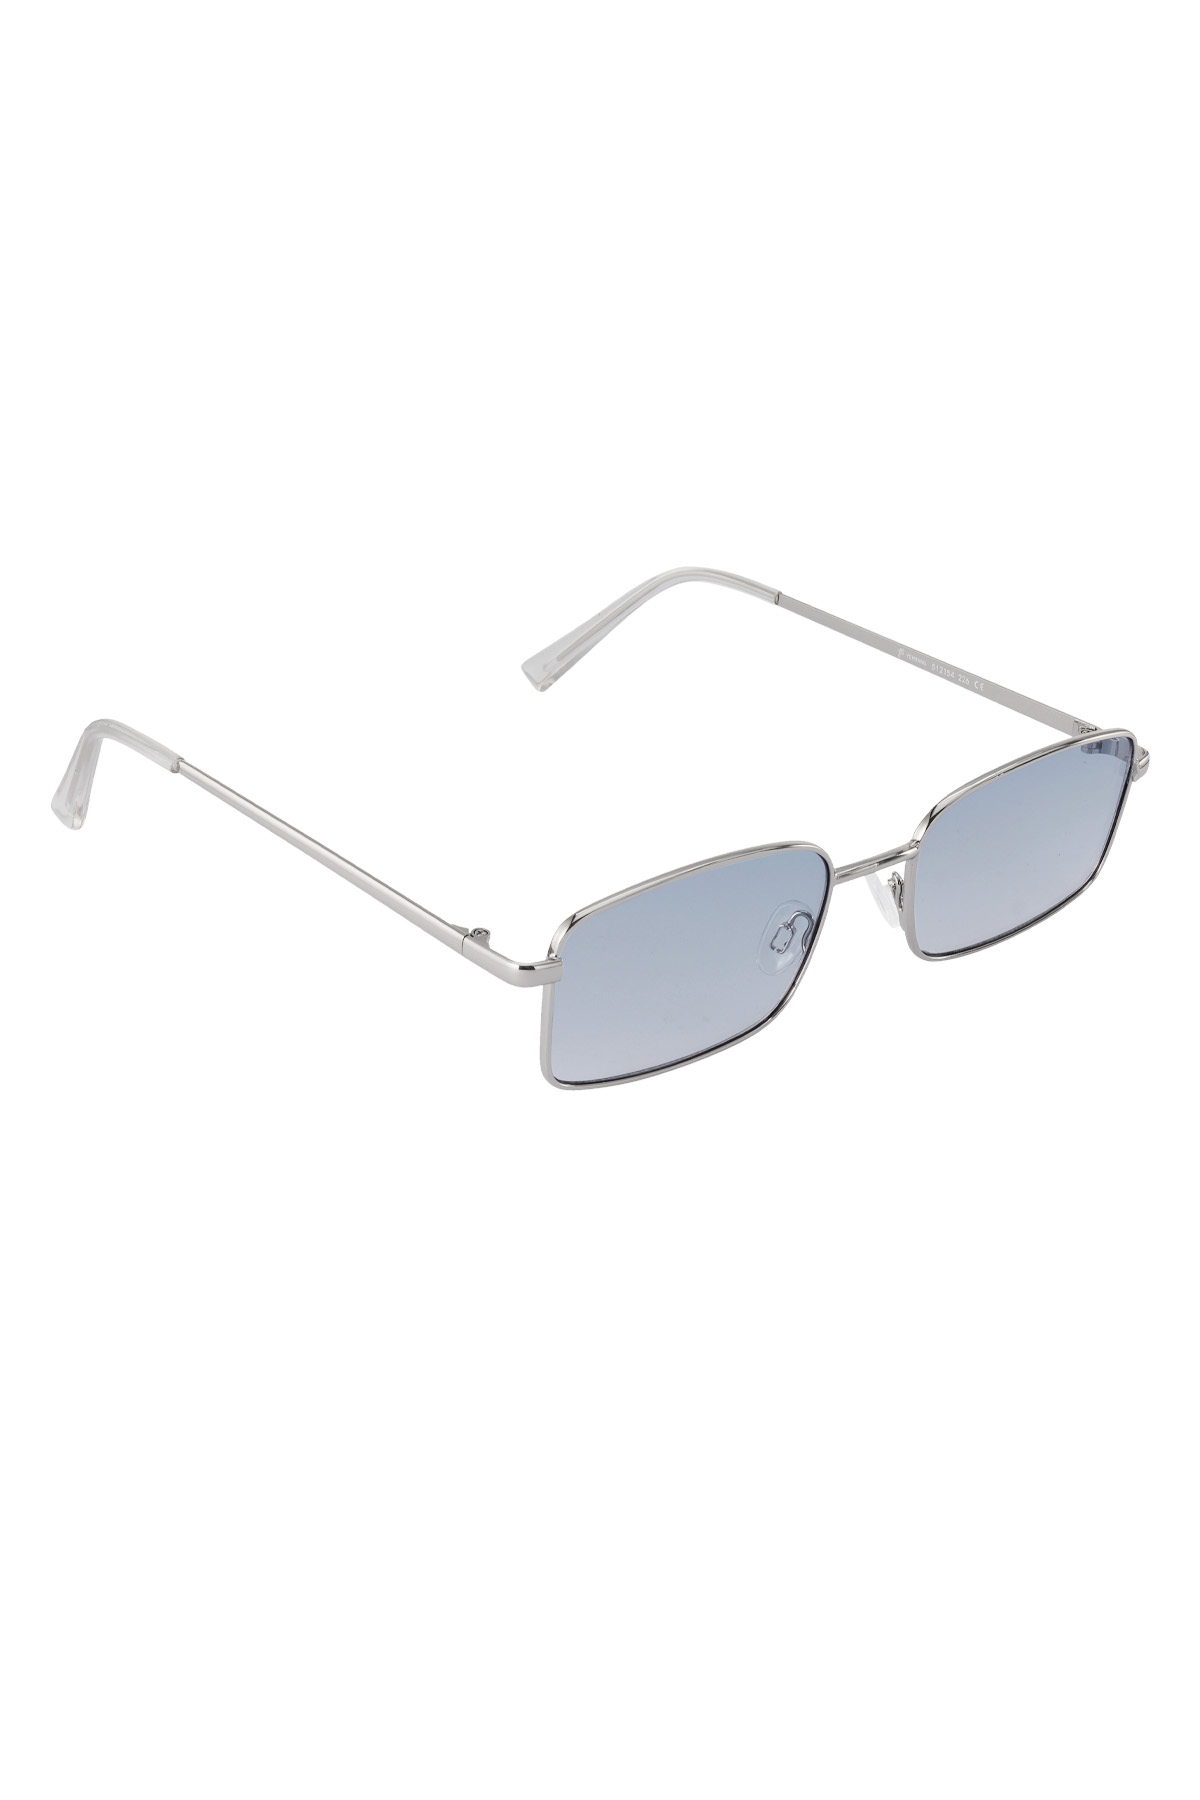 Sunglasses radiant view - light blue